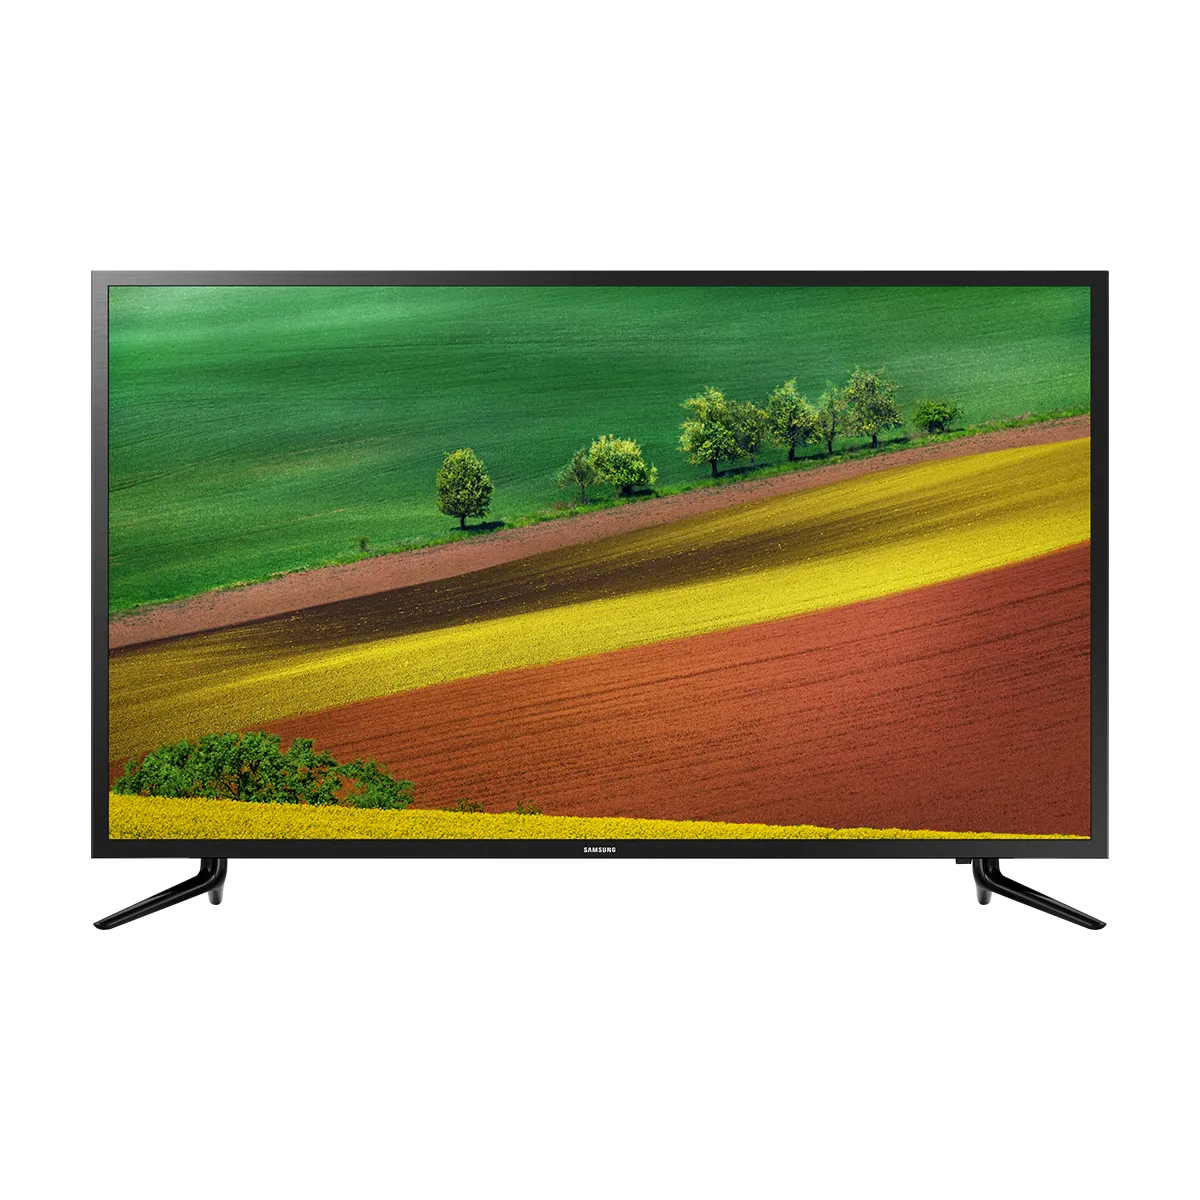 Samsung UA32N4010 32" LED TV